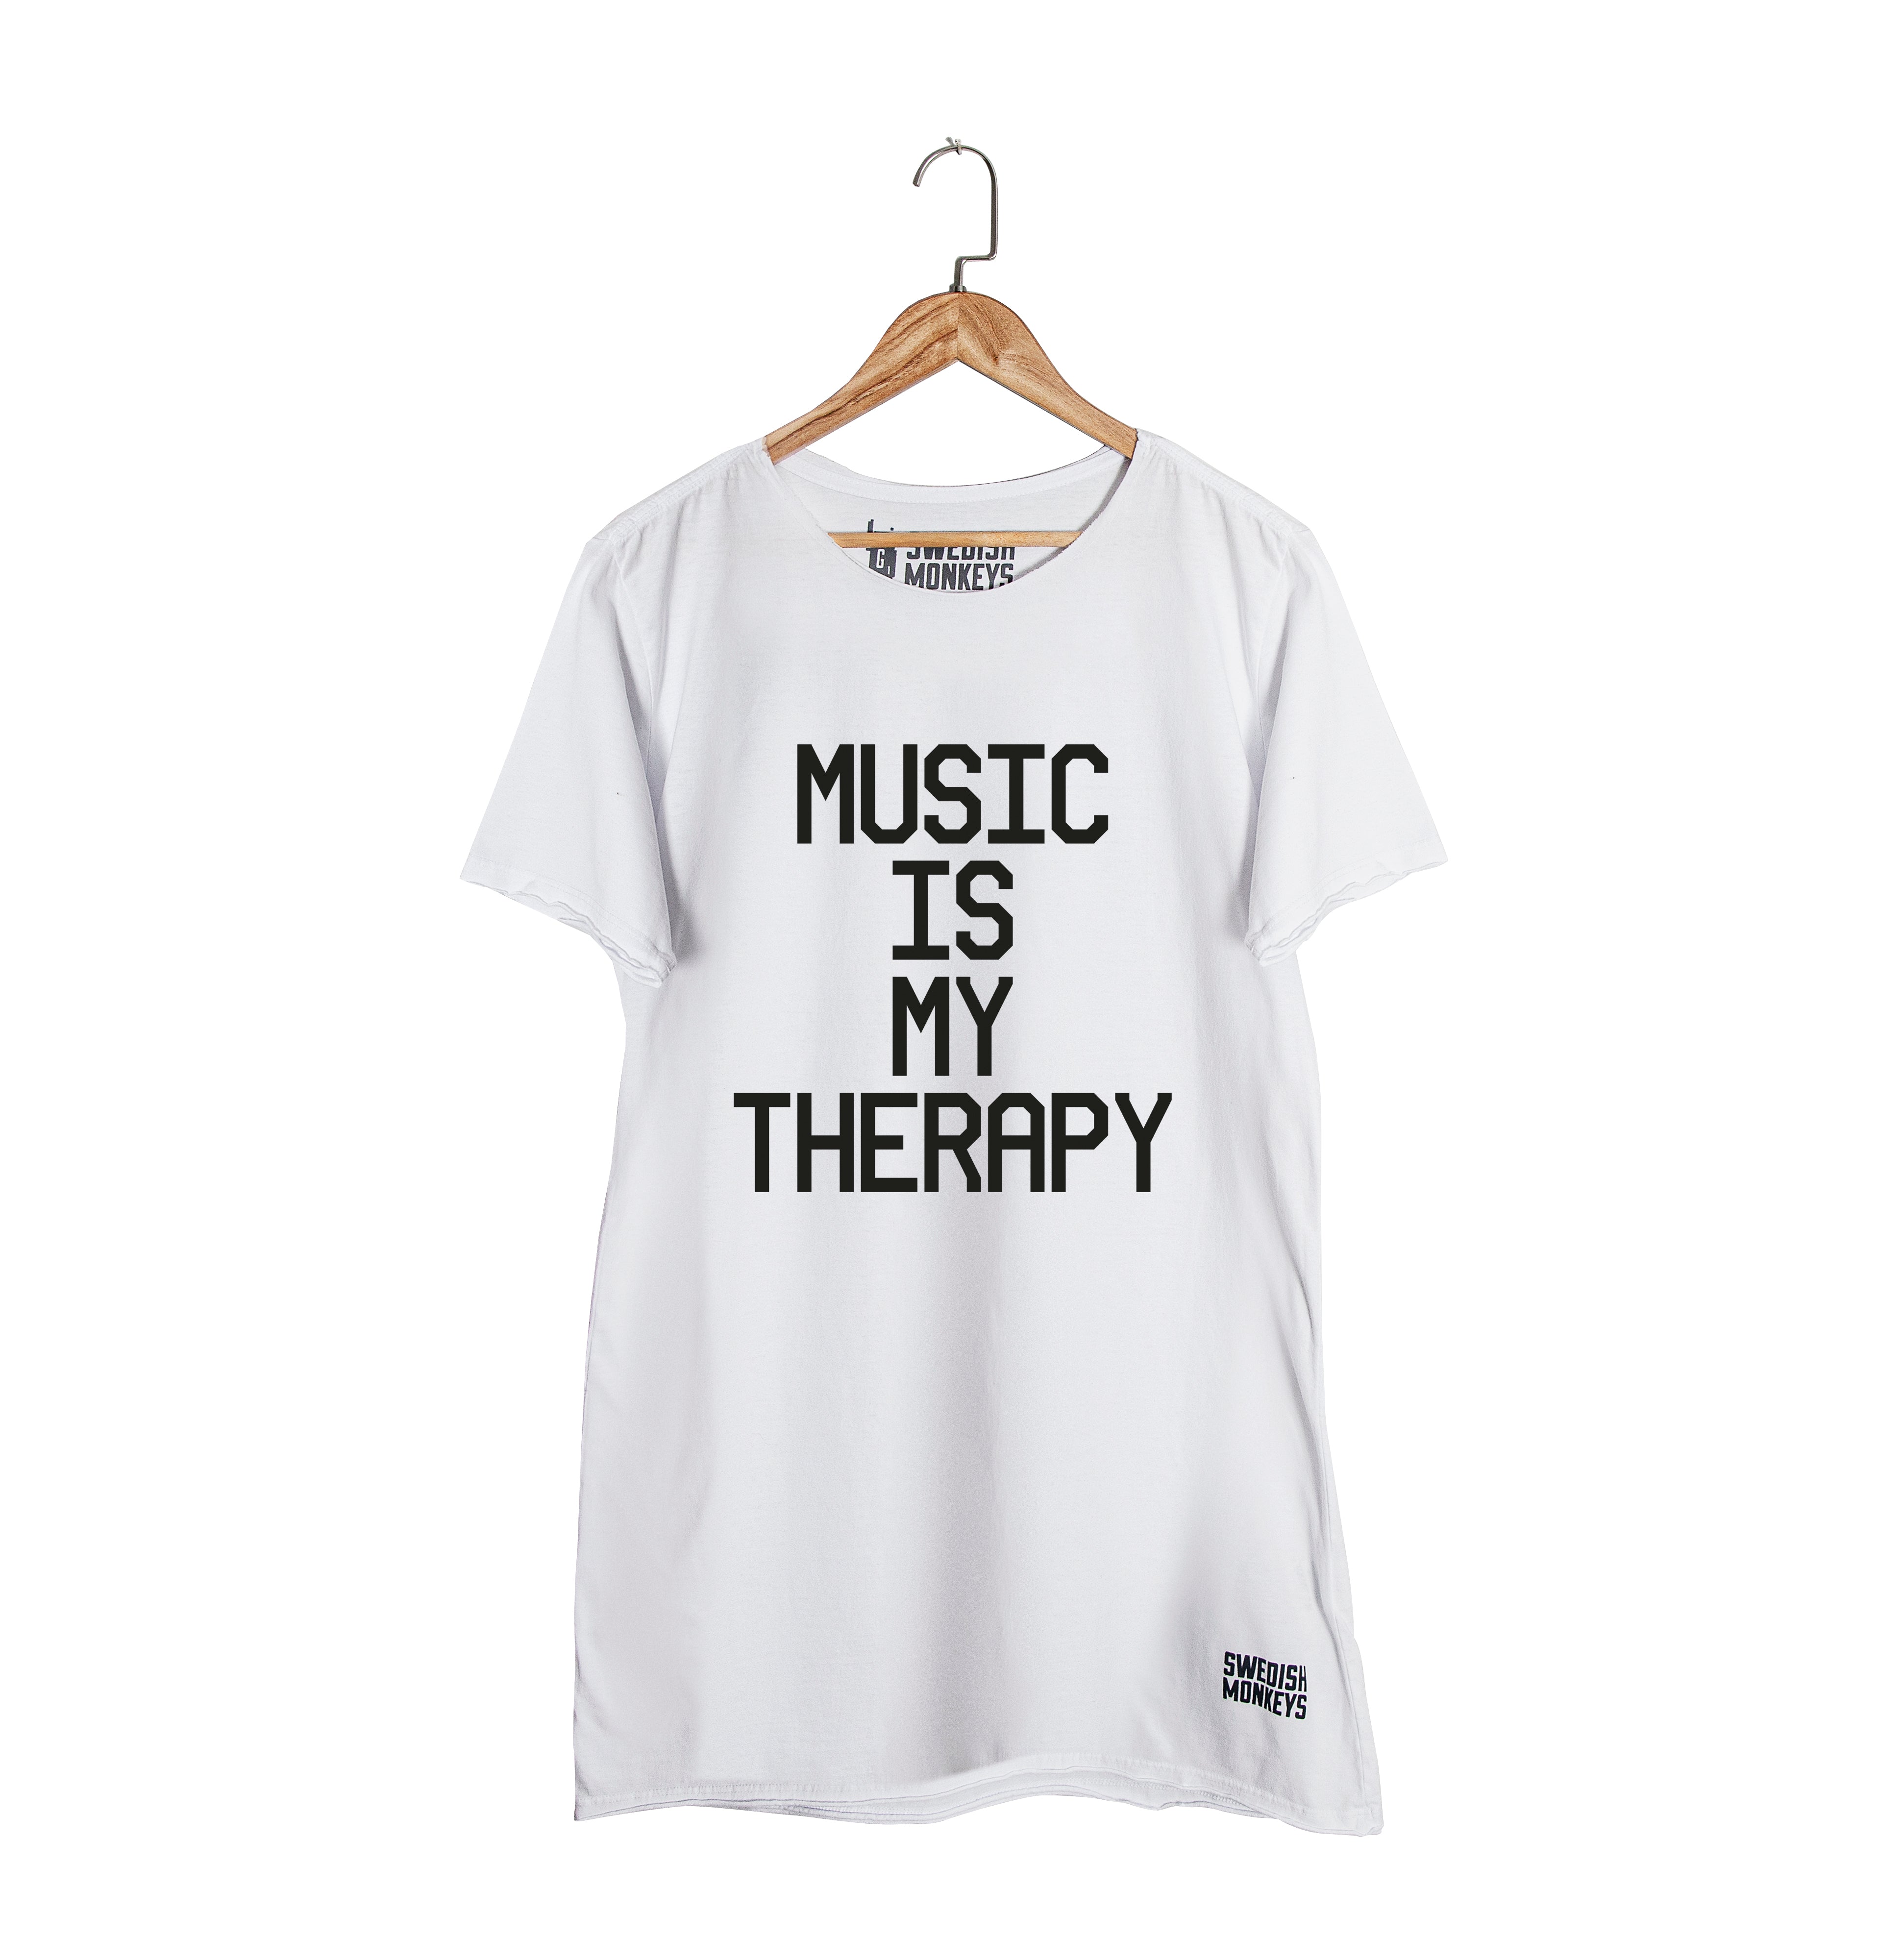 Camiseta Longline Música Eletrônica - Dance All Night, Sleep All Day ( –  Swedish Monkeys Store